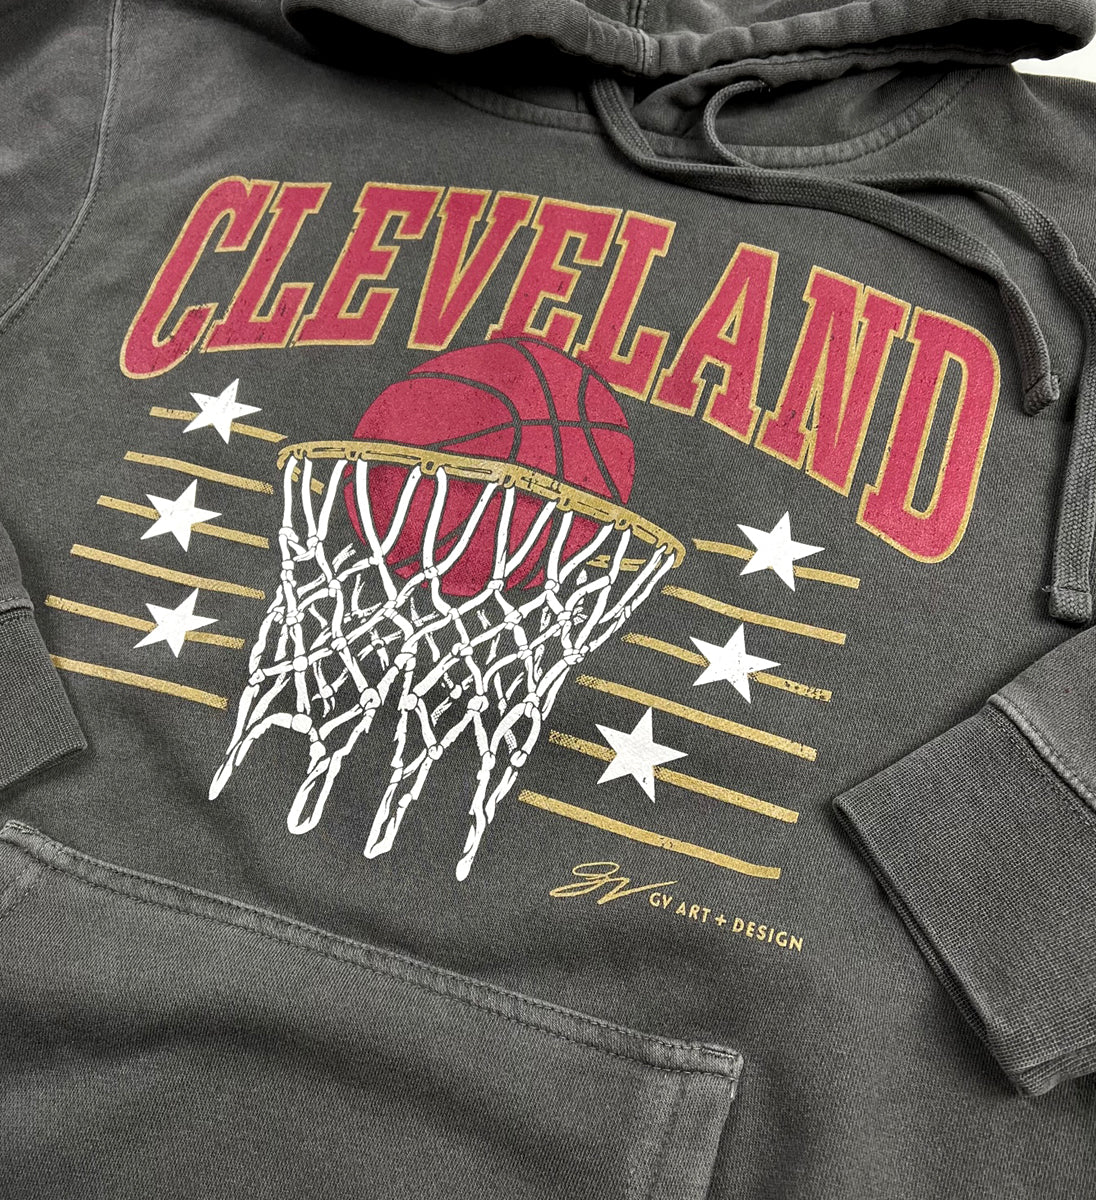 Charcoal Cleveland Basketball Vintage Hooded Sweatshirt